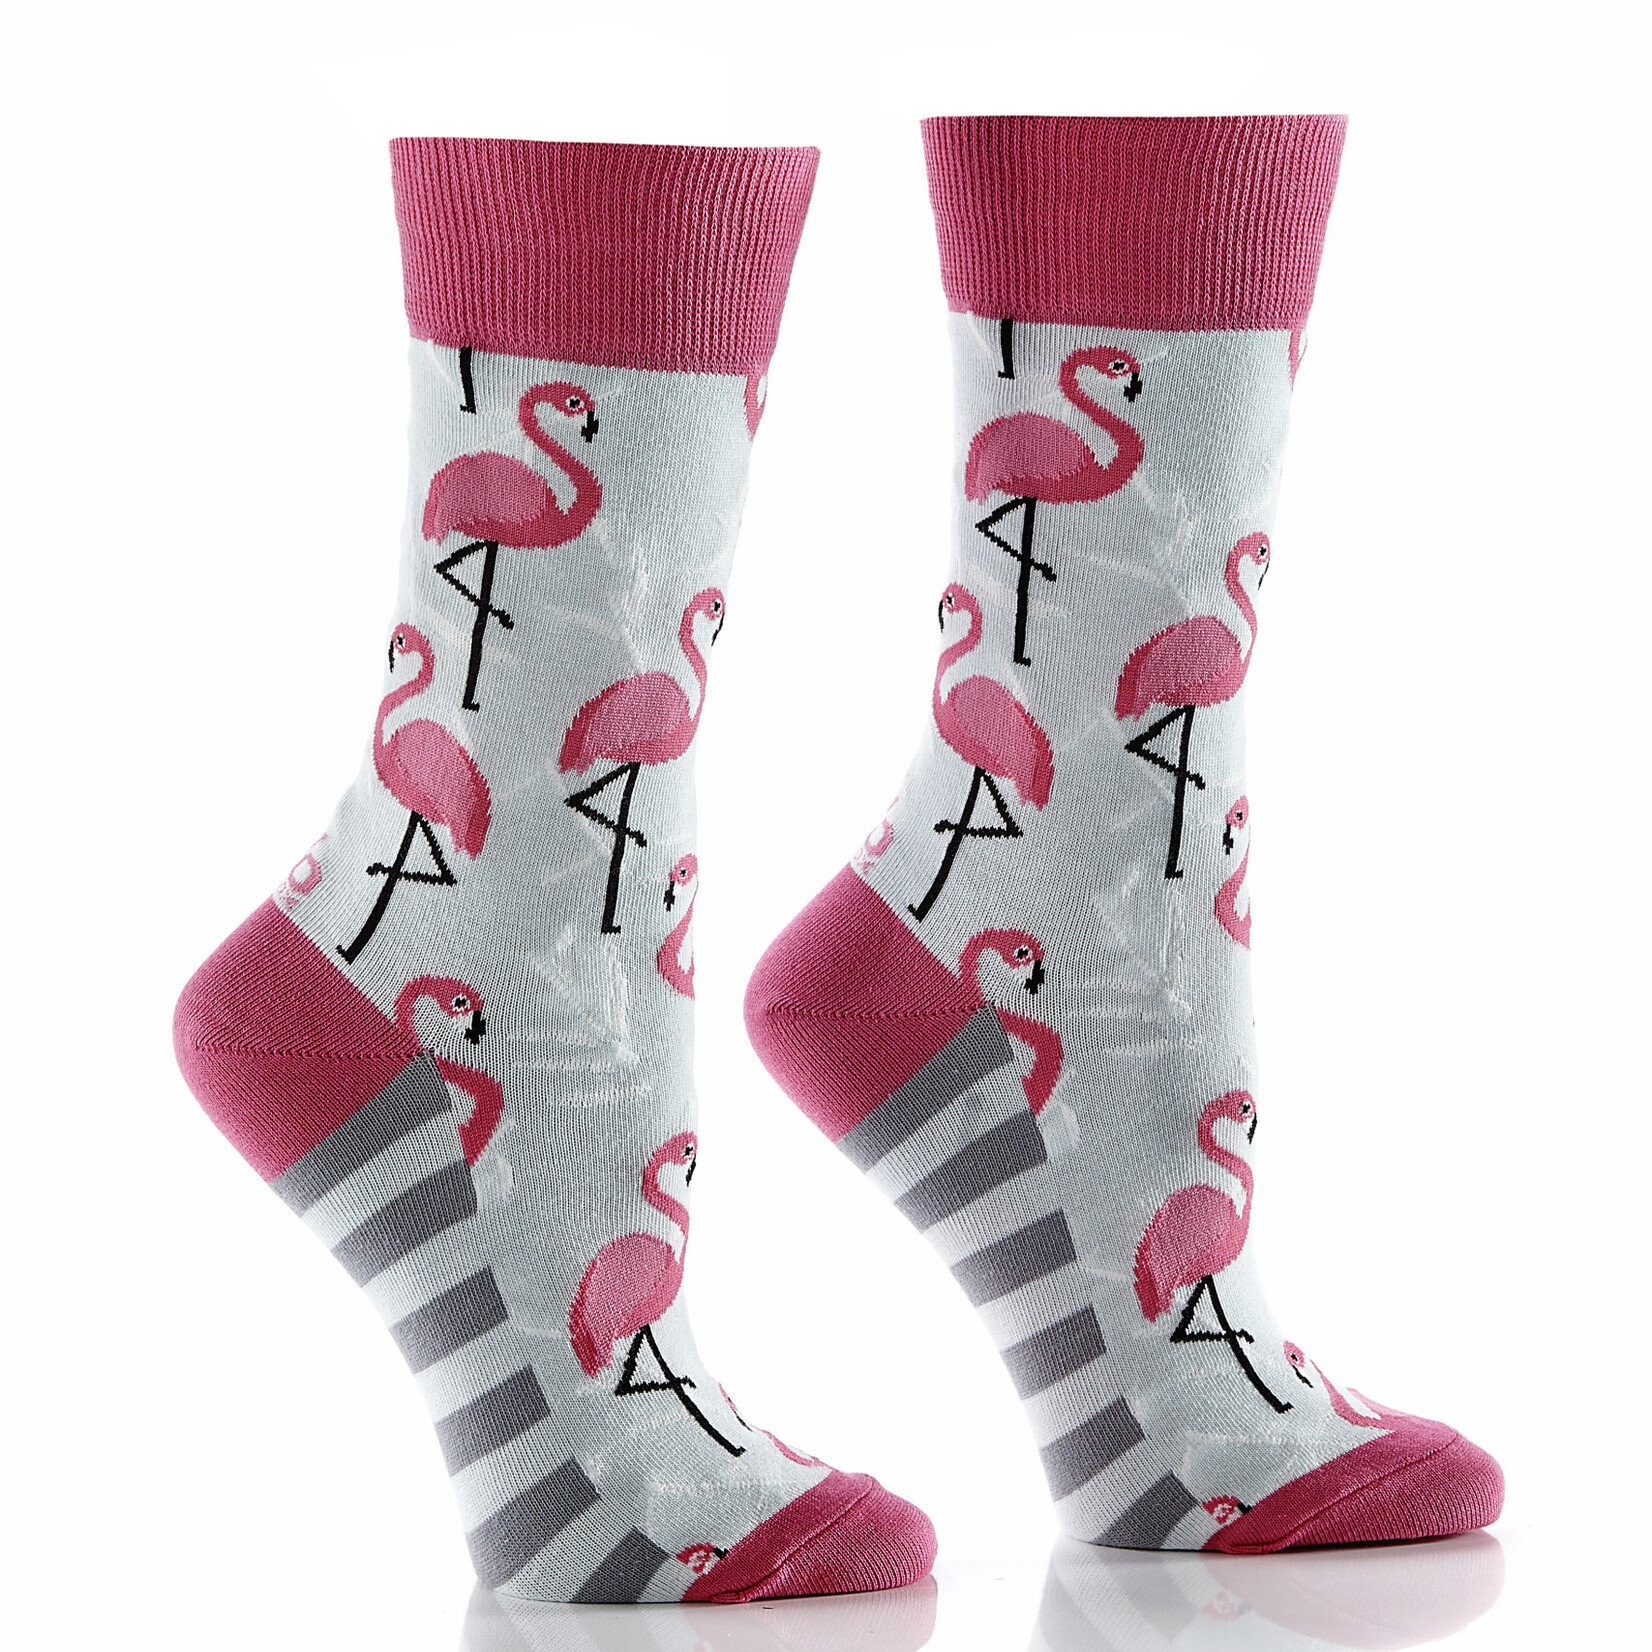 Yo & Co Women's Crew Sock, Pink Flamingo